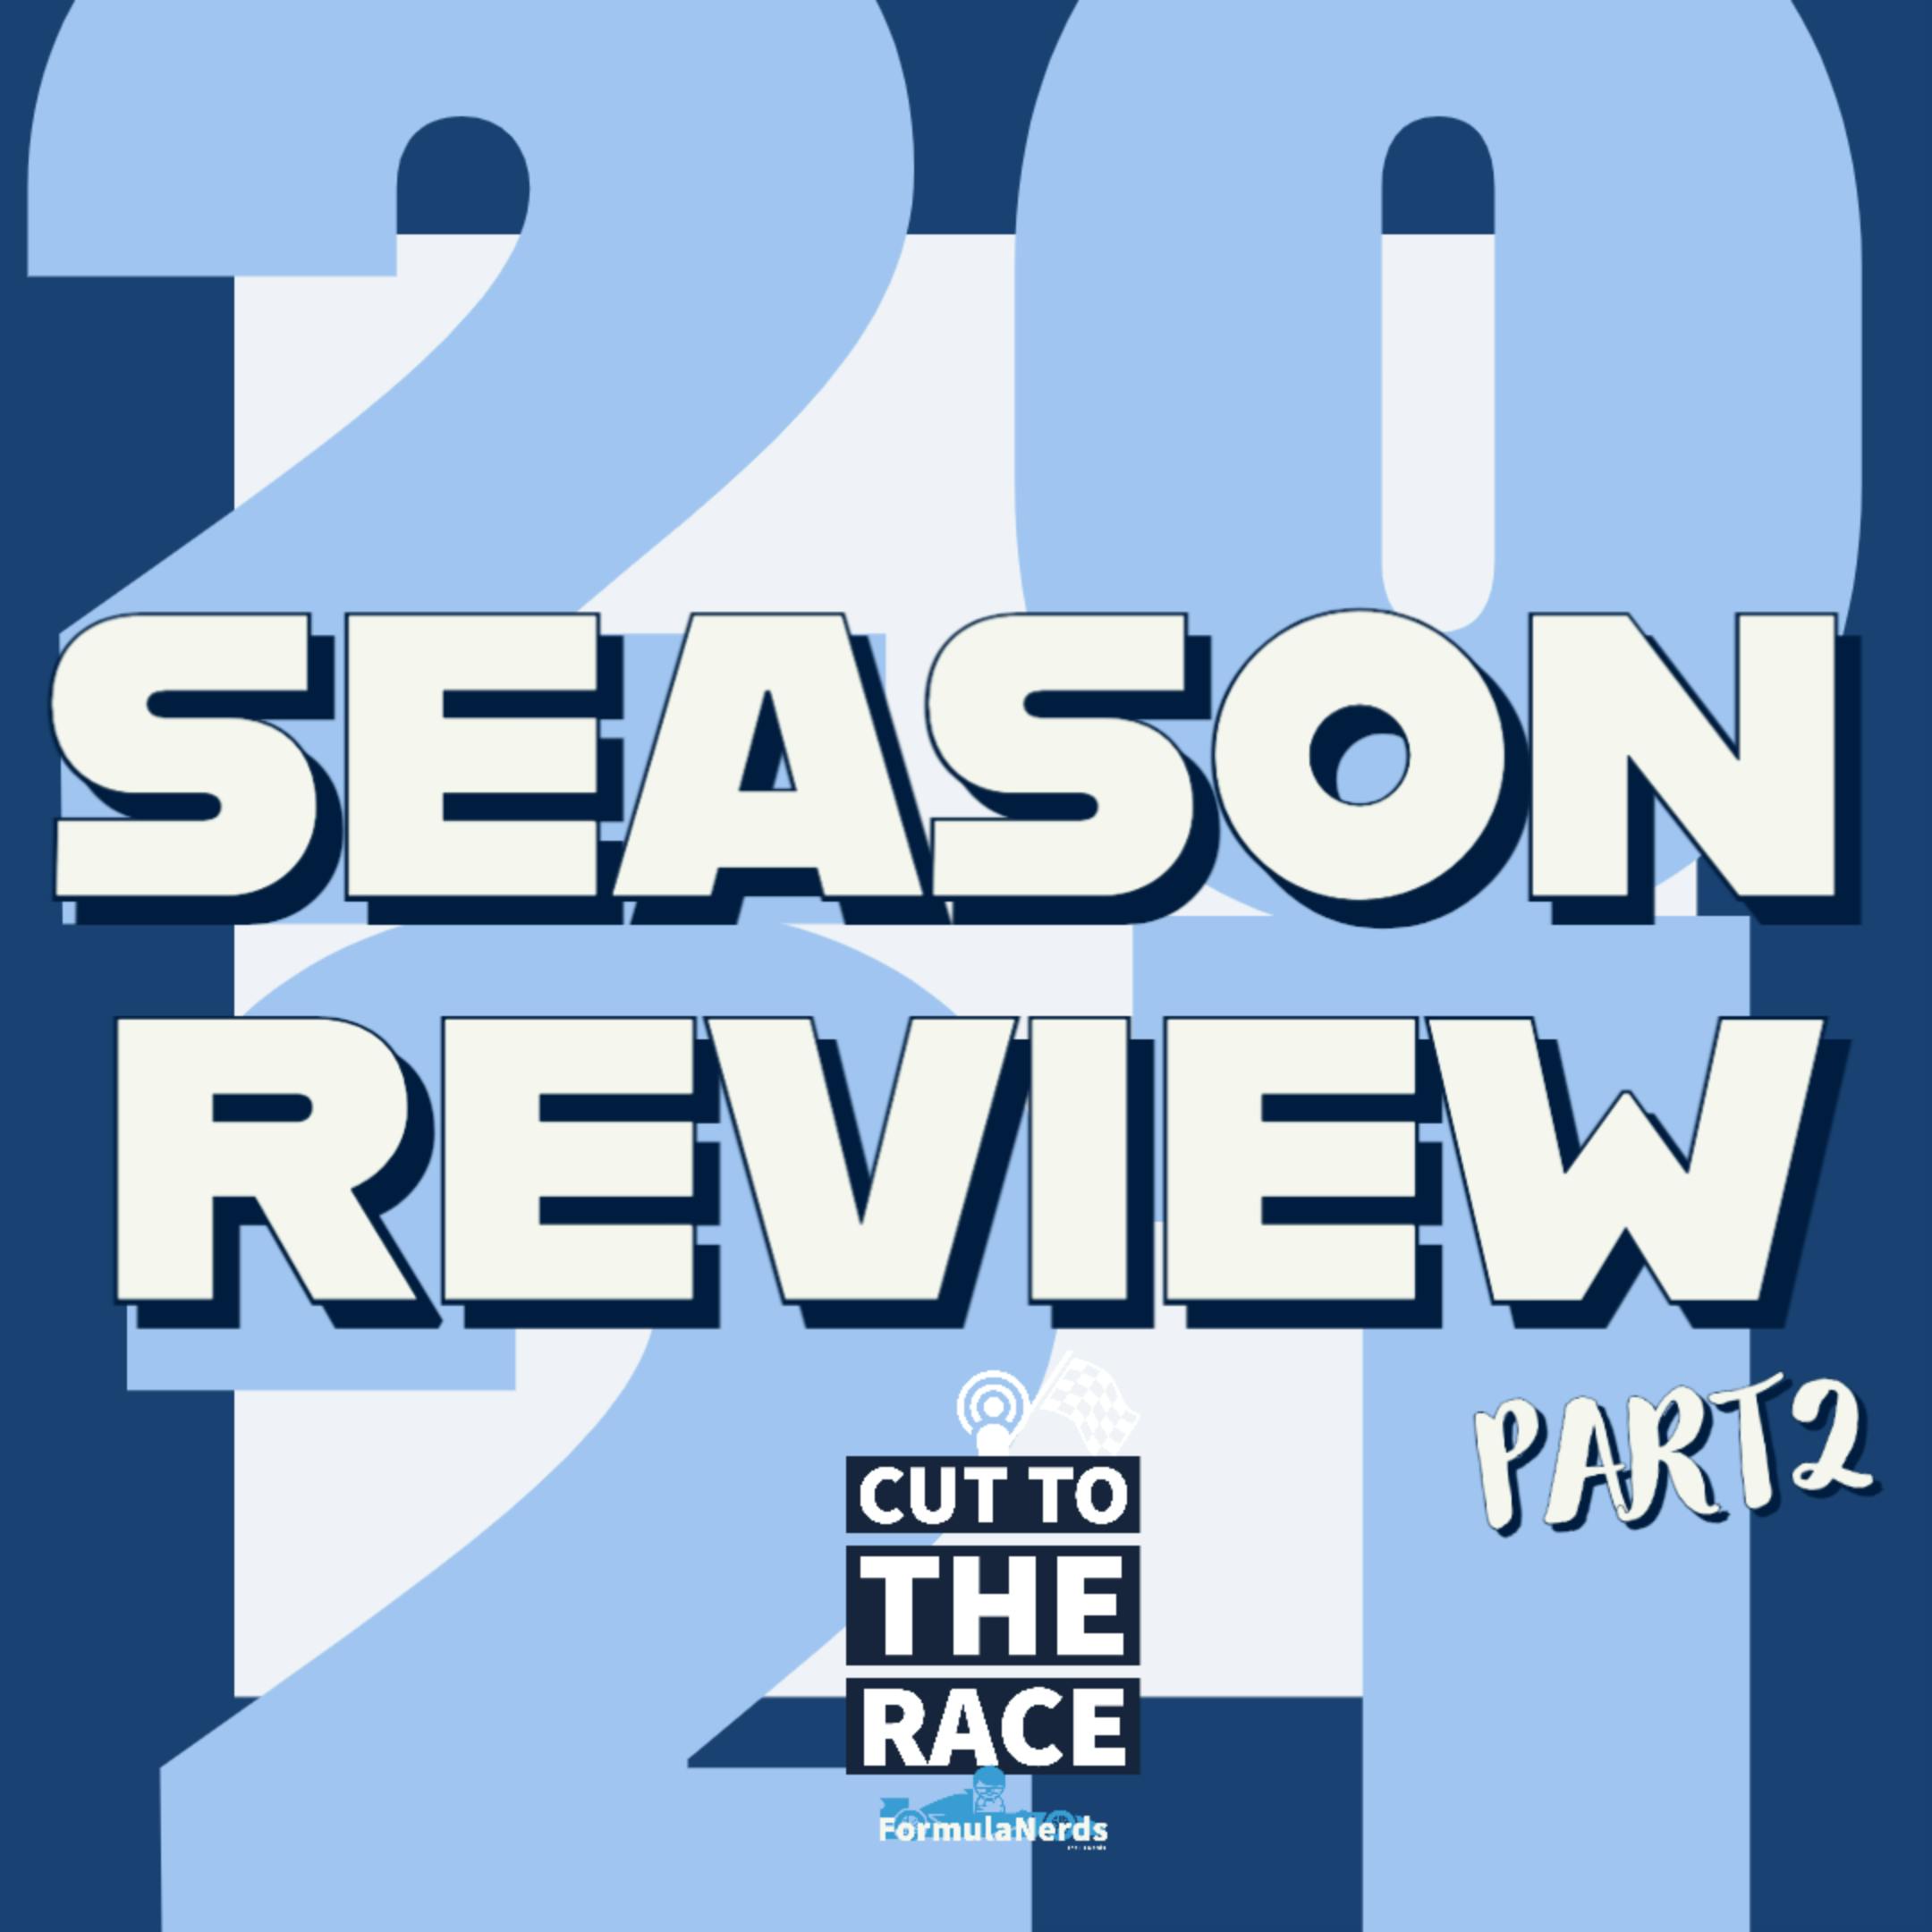 Verstappen VS Hamilton - The FormulaNerds 2021 Season Review Part 2